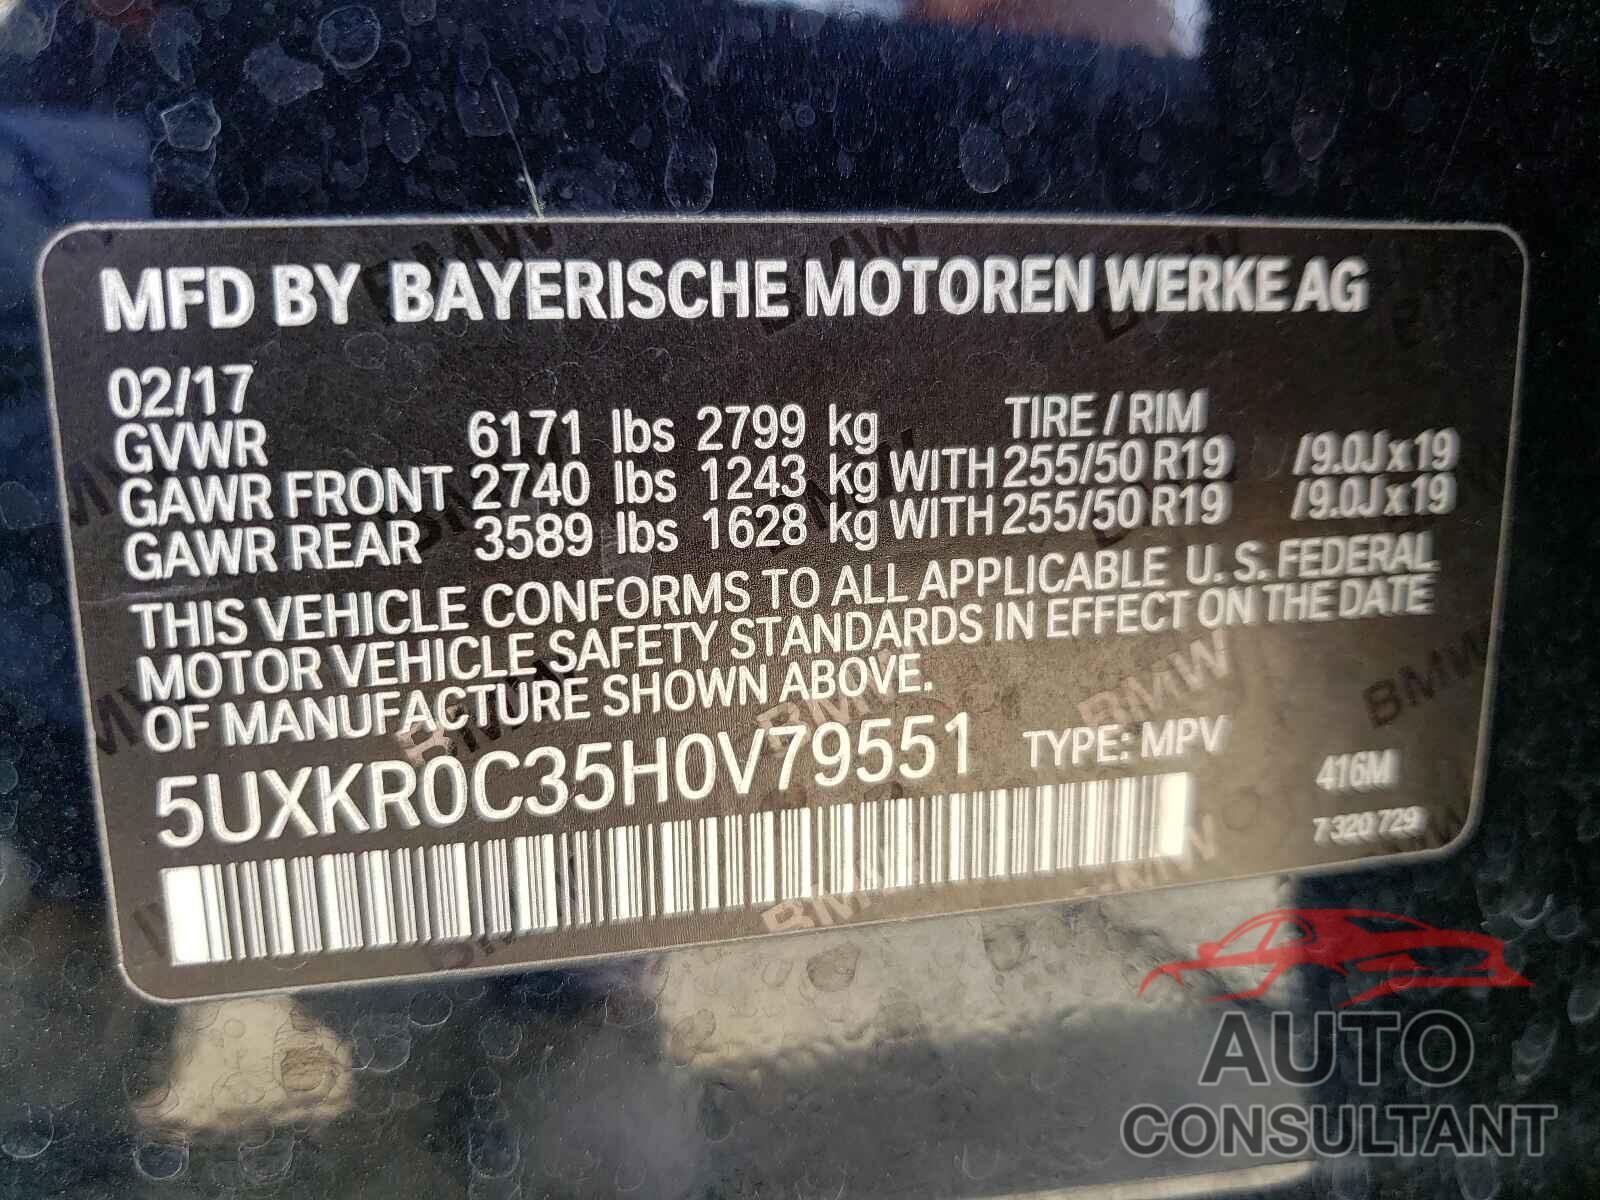 BMW X5 2017 - 5UXKR0C35H0V79551